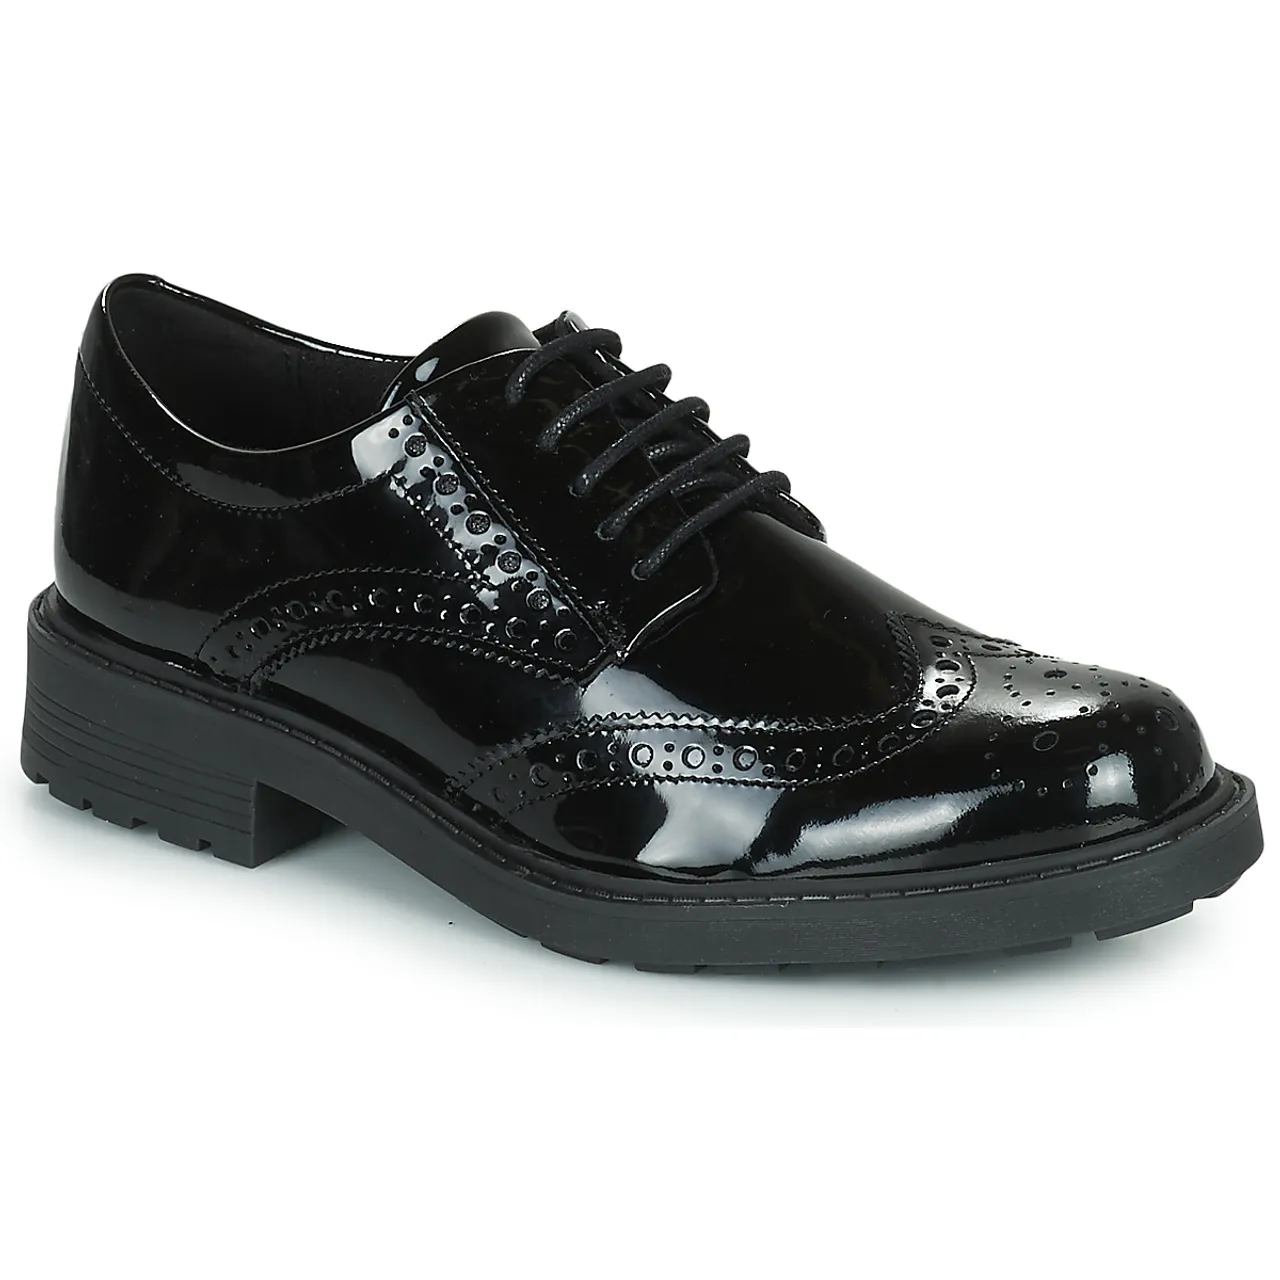 Clarks  ORINOCO2 LIMIT  women's Casual Shoes in Black